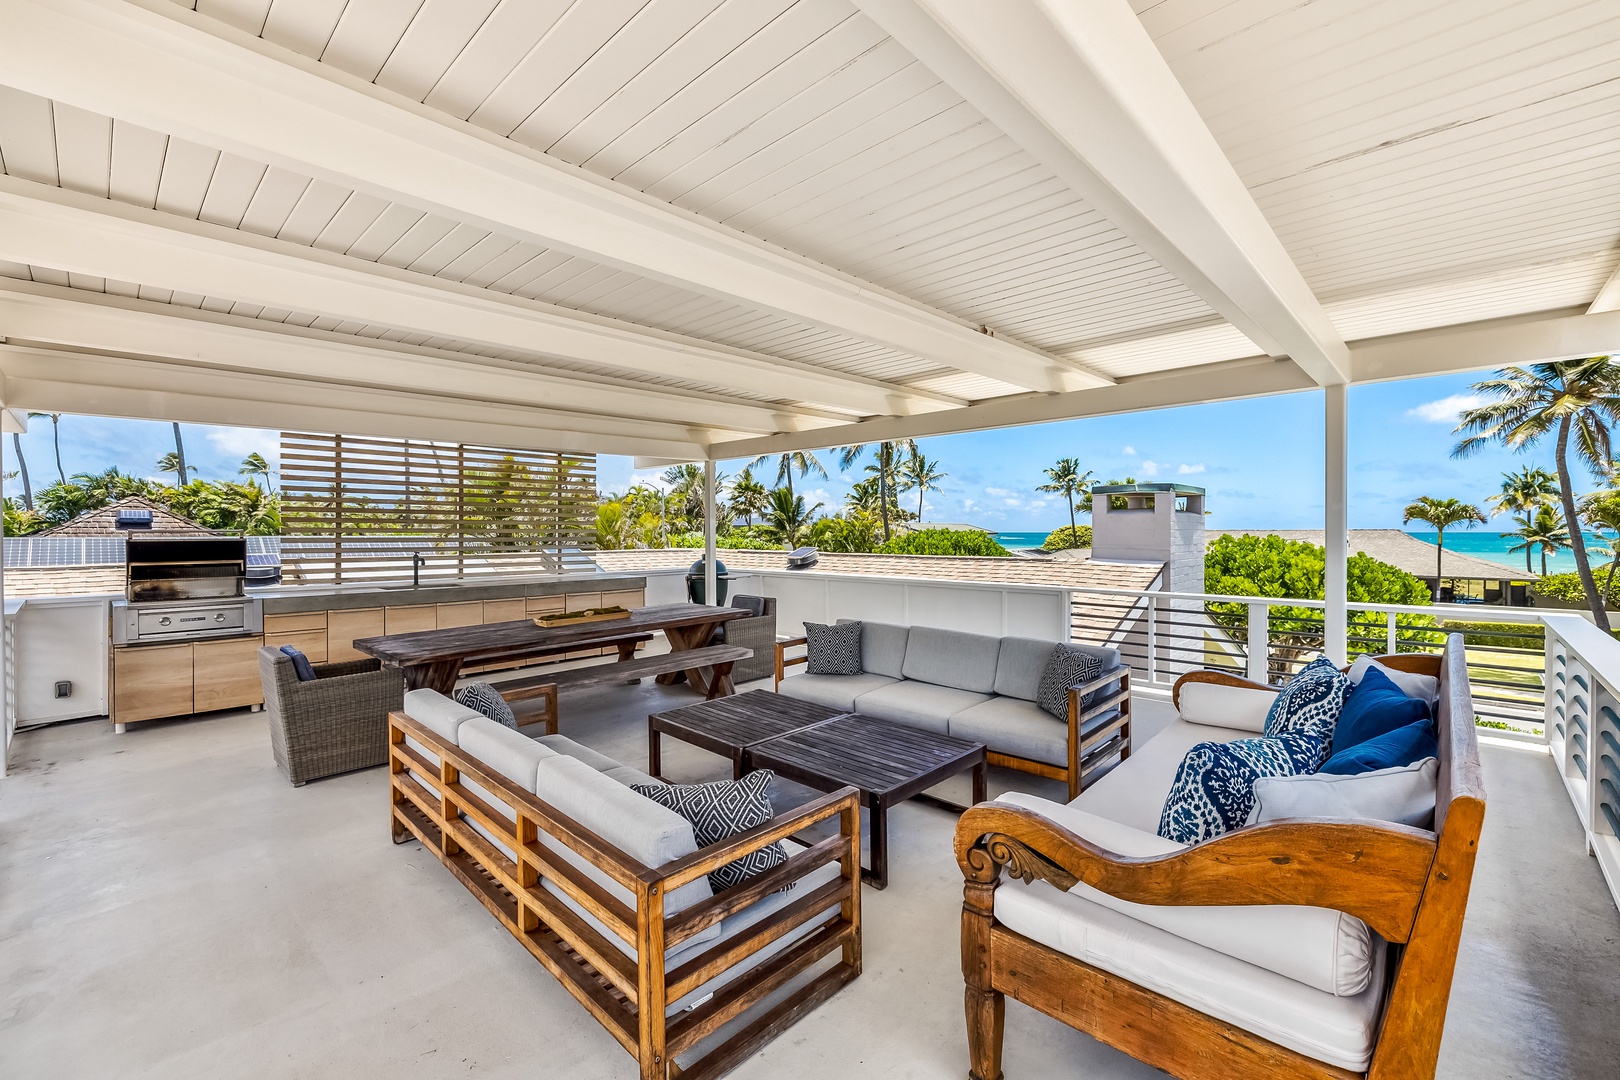 Kailua Vacation Rentals, Hale Ohana - Venture up to the rooftop deck to enjoy peekaboo ocean views